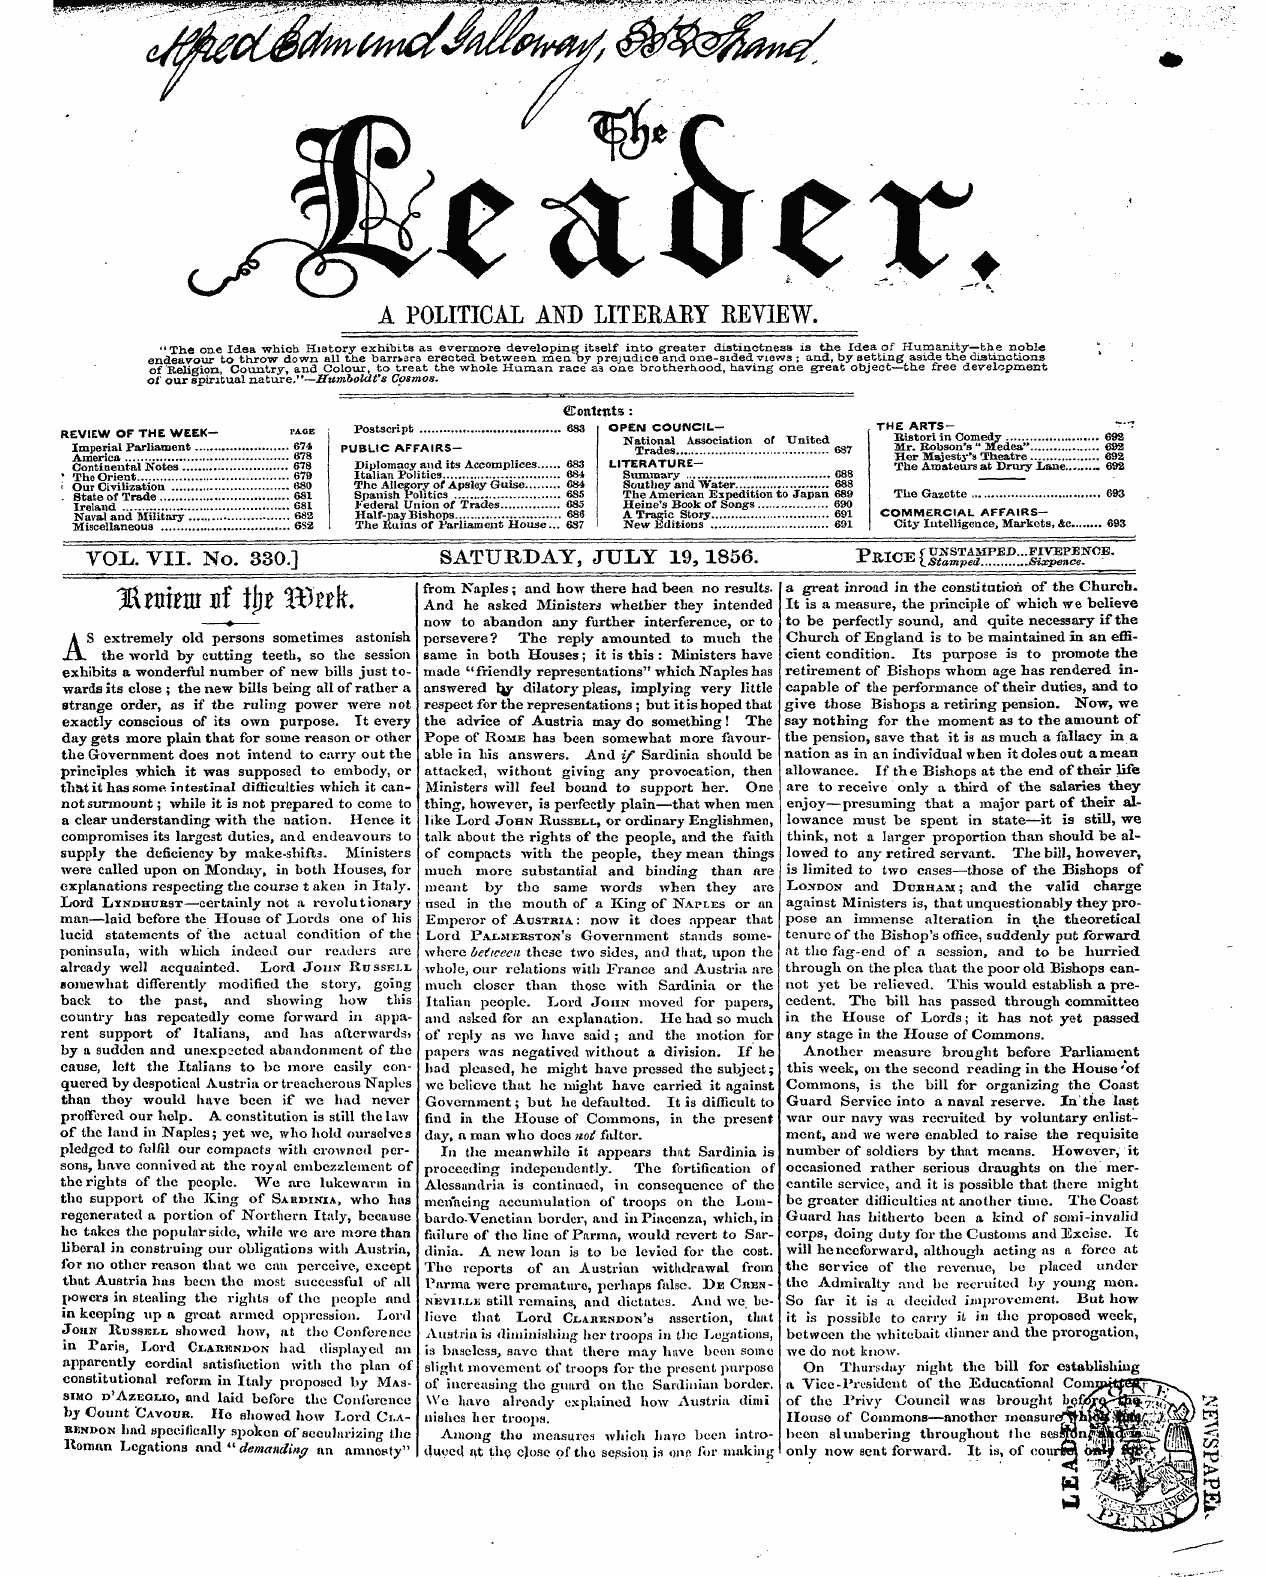 Leader (1850-1860): jS F Y, 2nd edition - You. Vii. No. 330.1 Saturday, July 19,18...